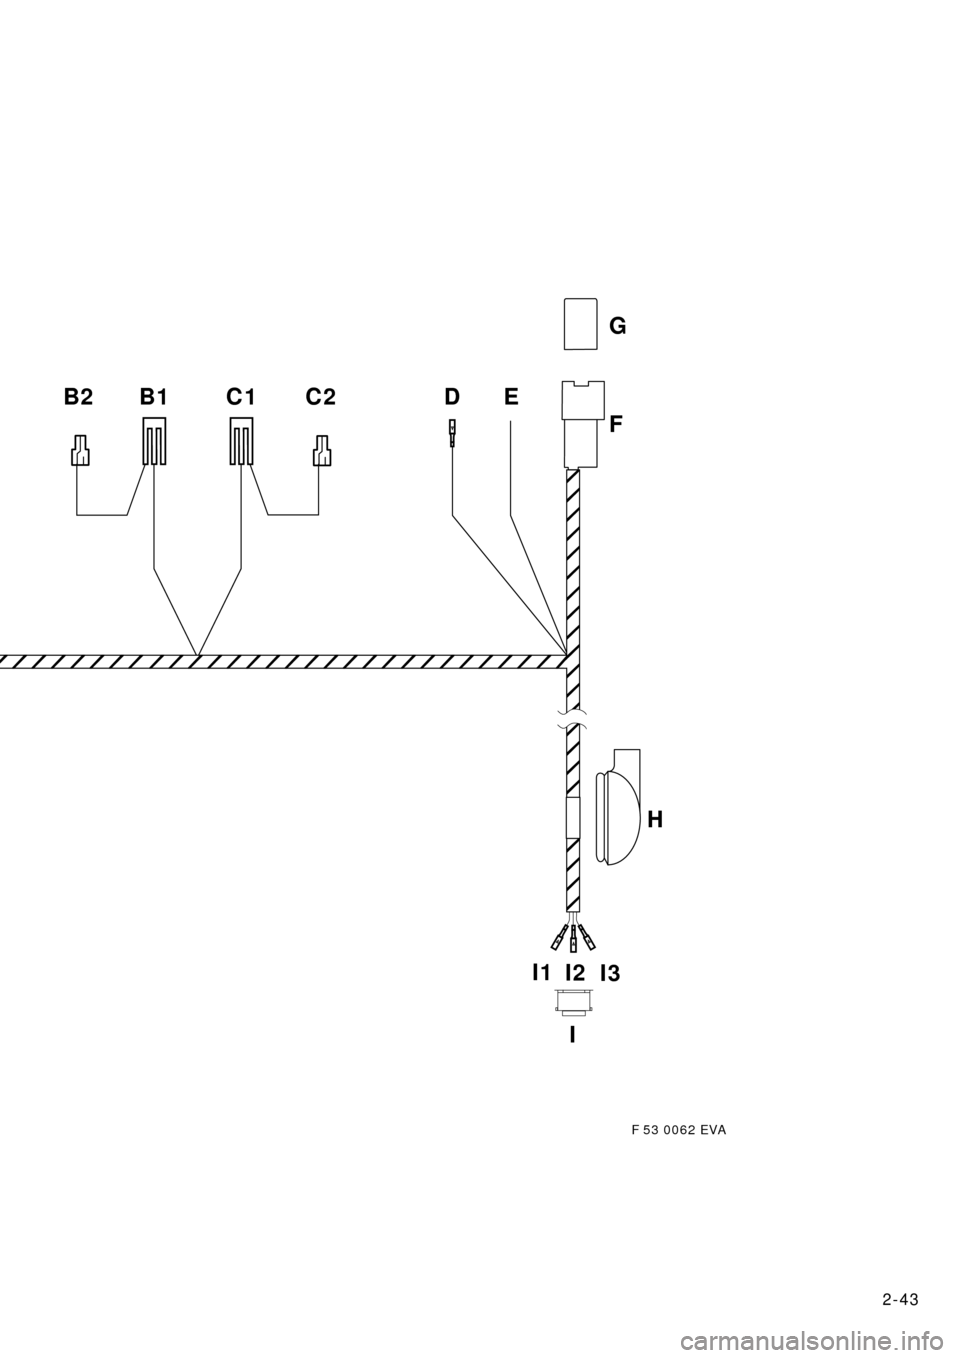 BMW X5 2000 E53 Xenon Lights Instalation Instruction Manual 2-43
F 53 0062 EVA
I3 I2 I1
IH F G
DE C2 C1 B1 B2 